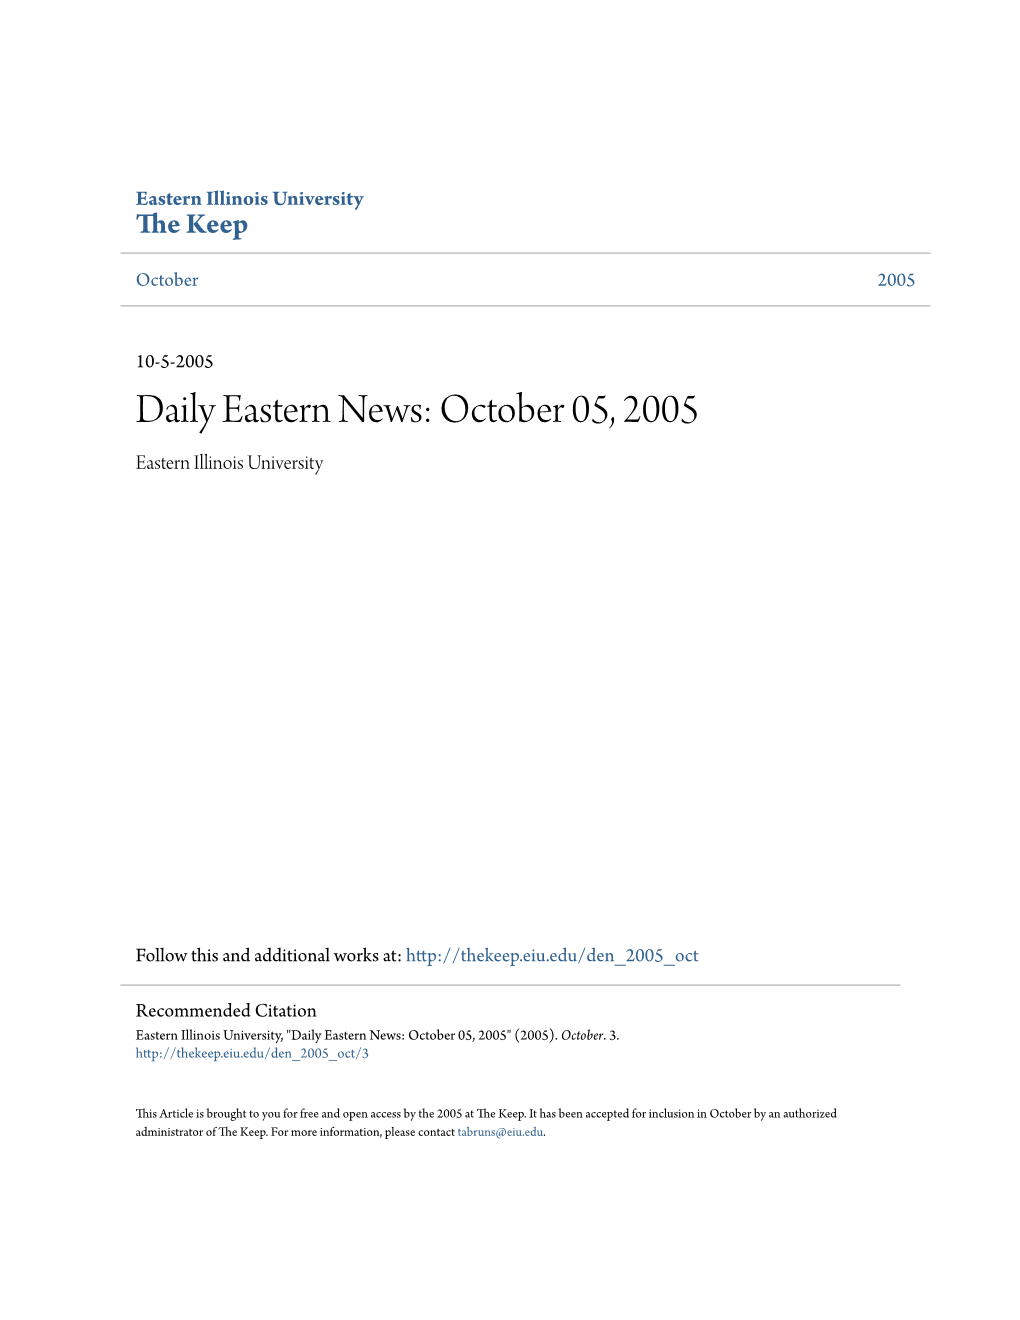 Daily Eastern News: October 05, 2005 Eastern Illinois University